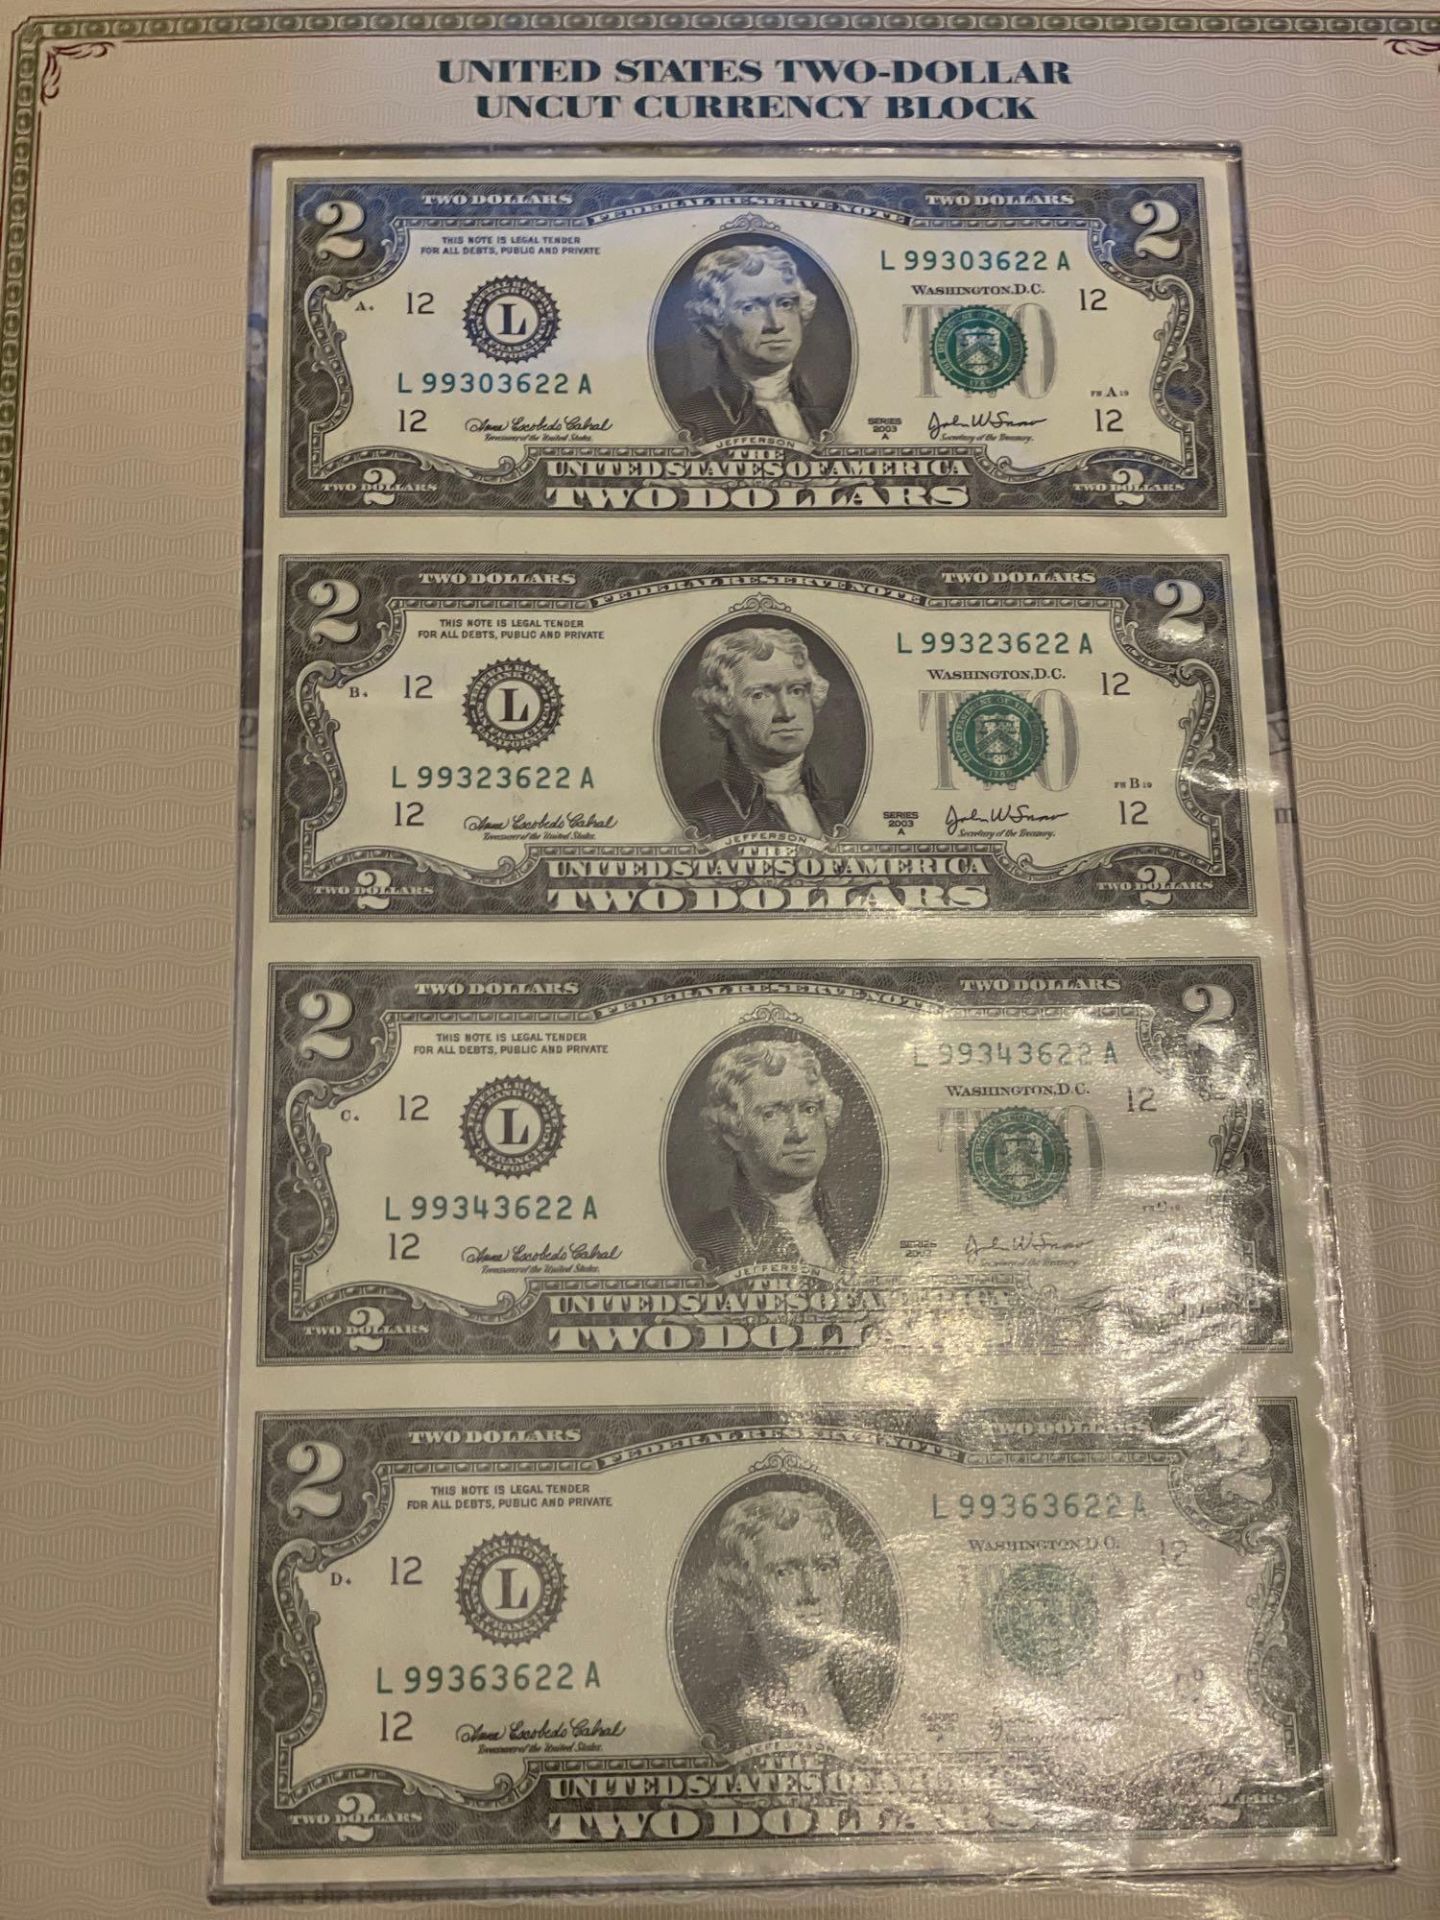 $2 Notes Folio Banknote Set "Red & Green Seals", uncut sheet - Image 4 of 8